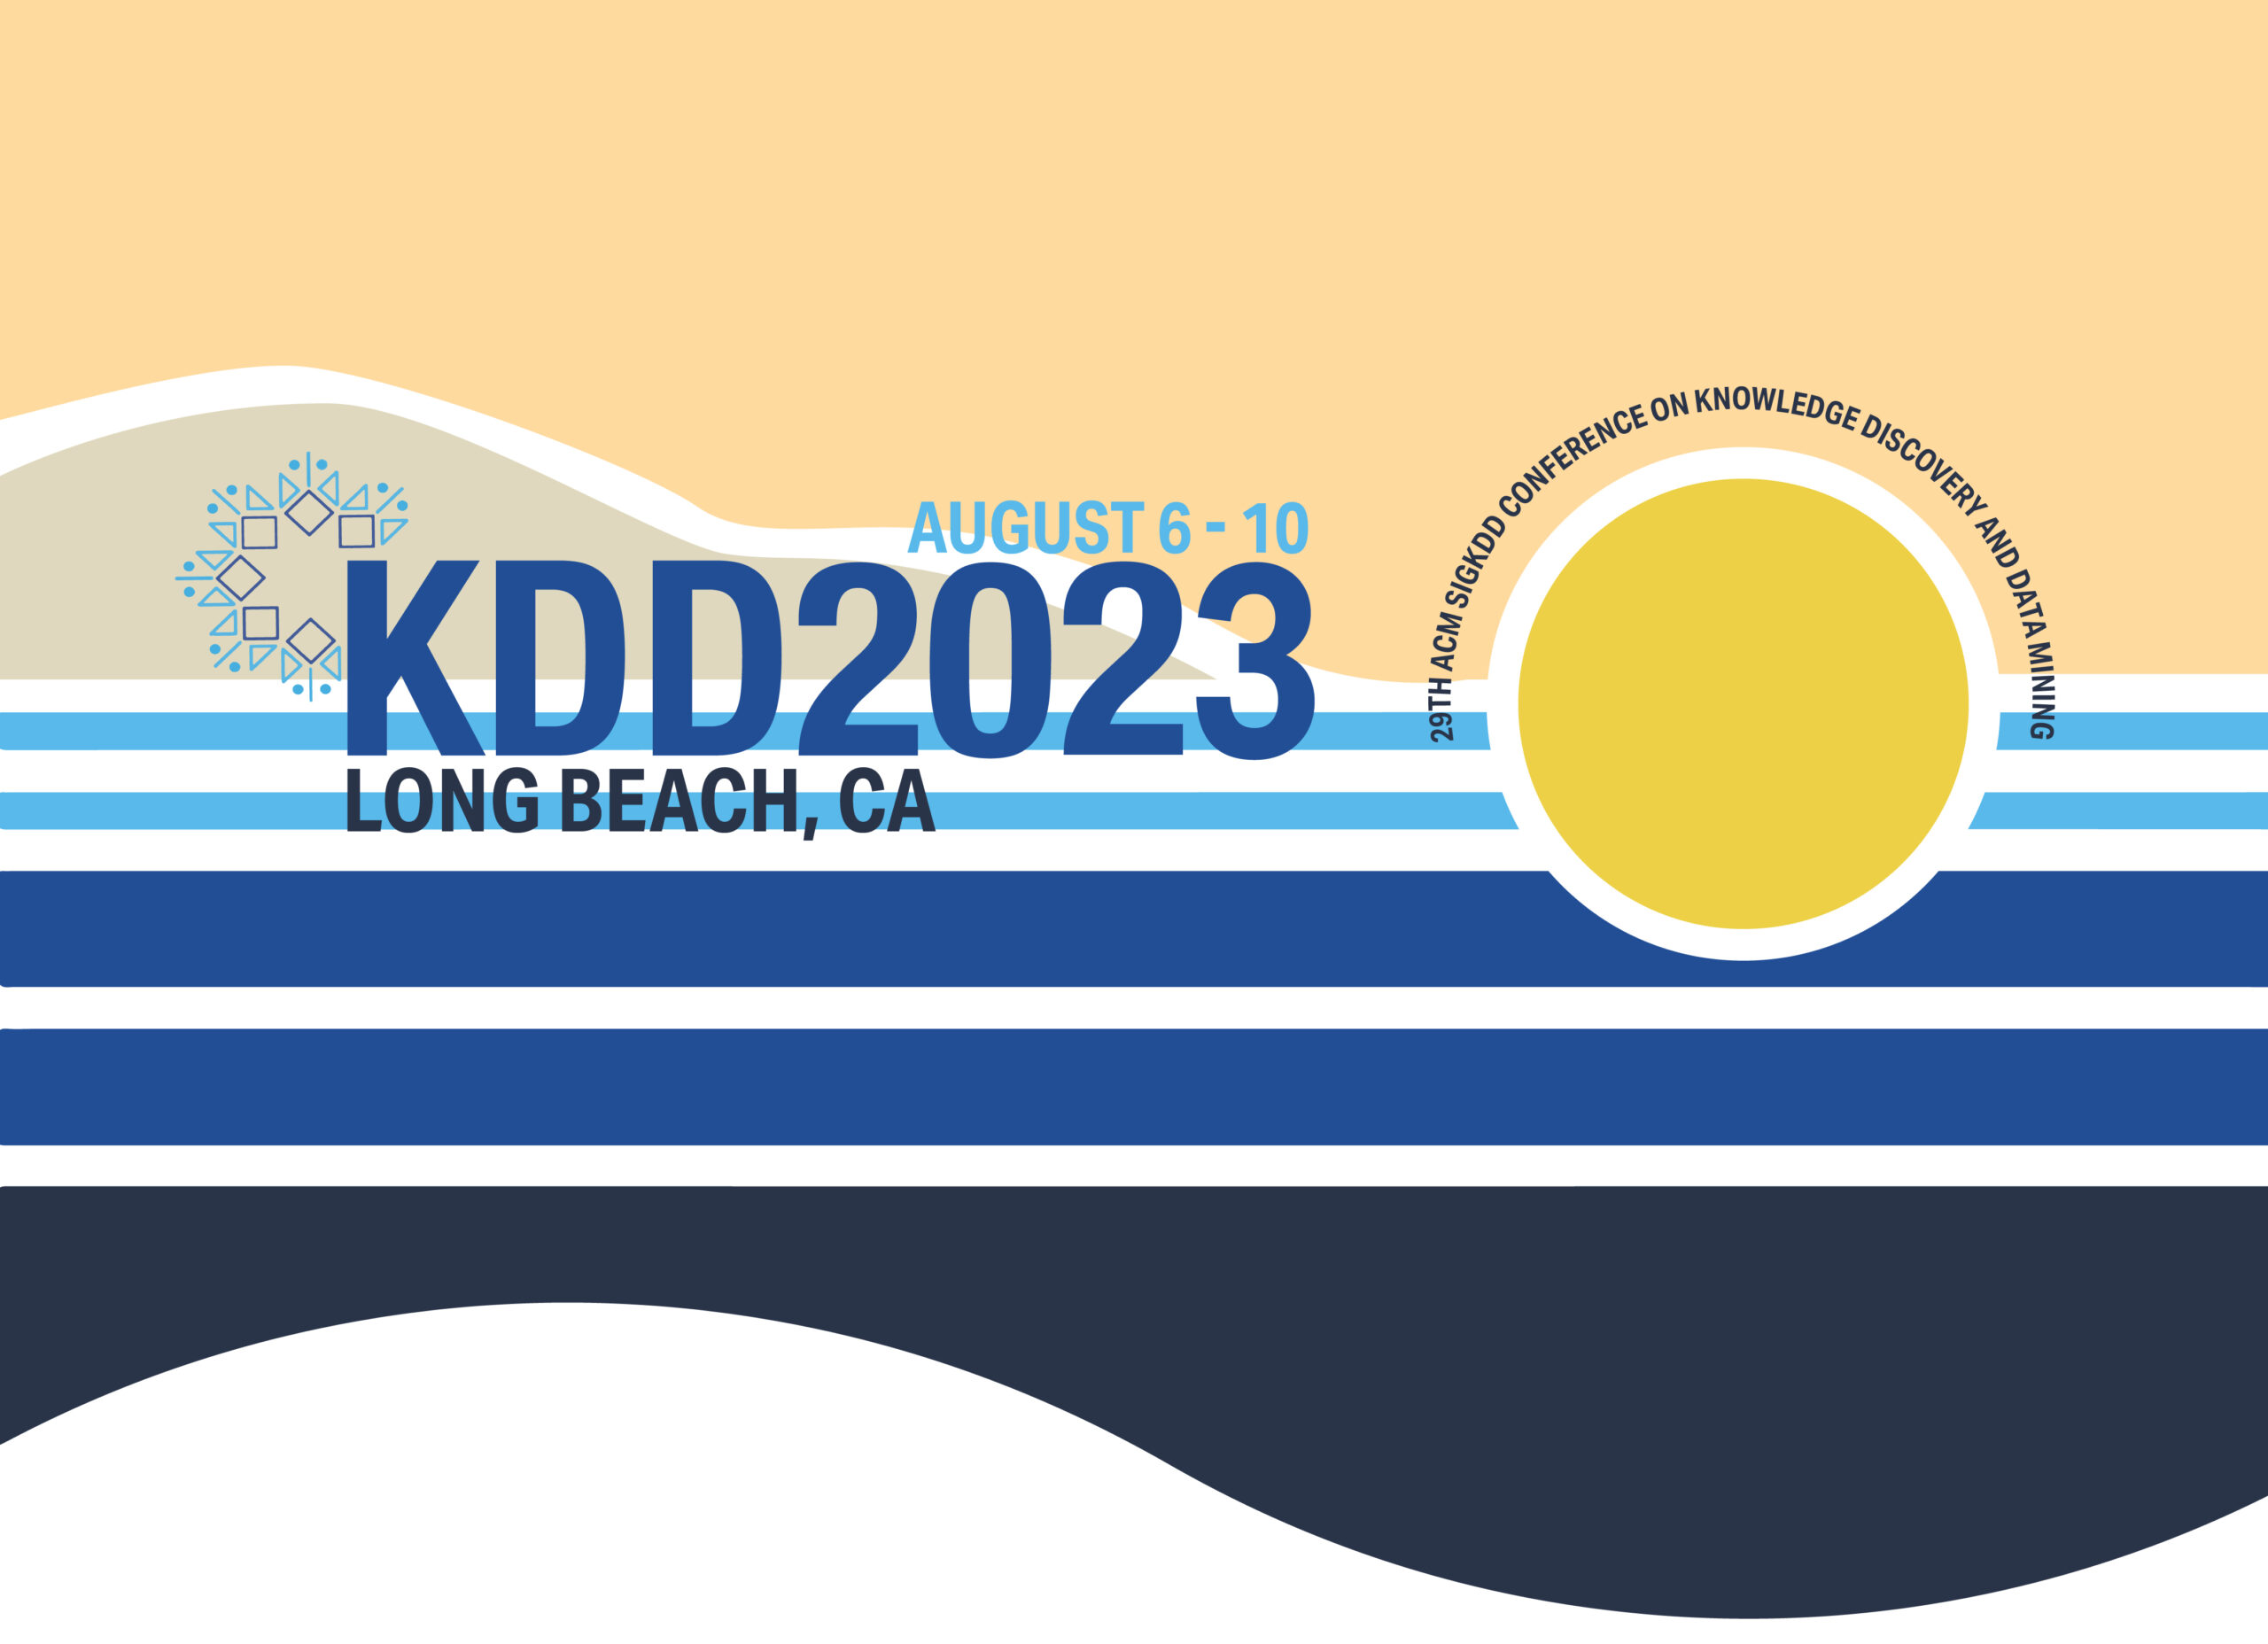 KDD 2023 logo